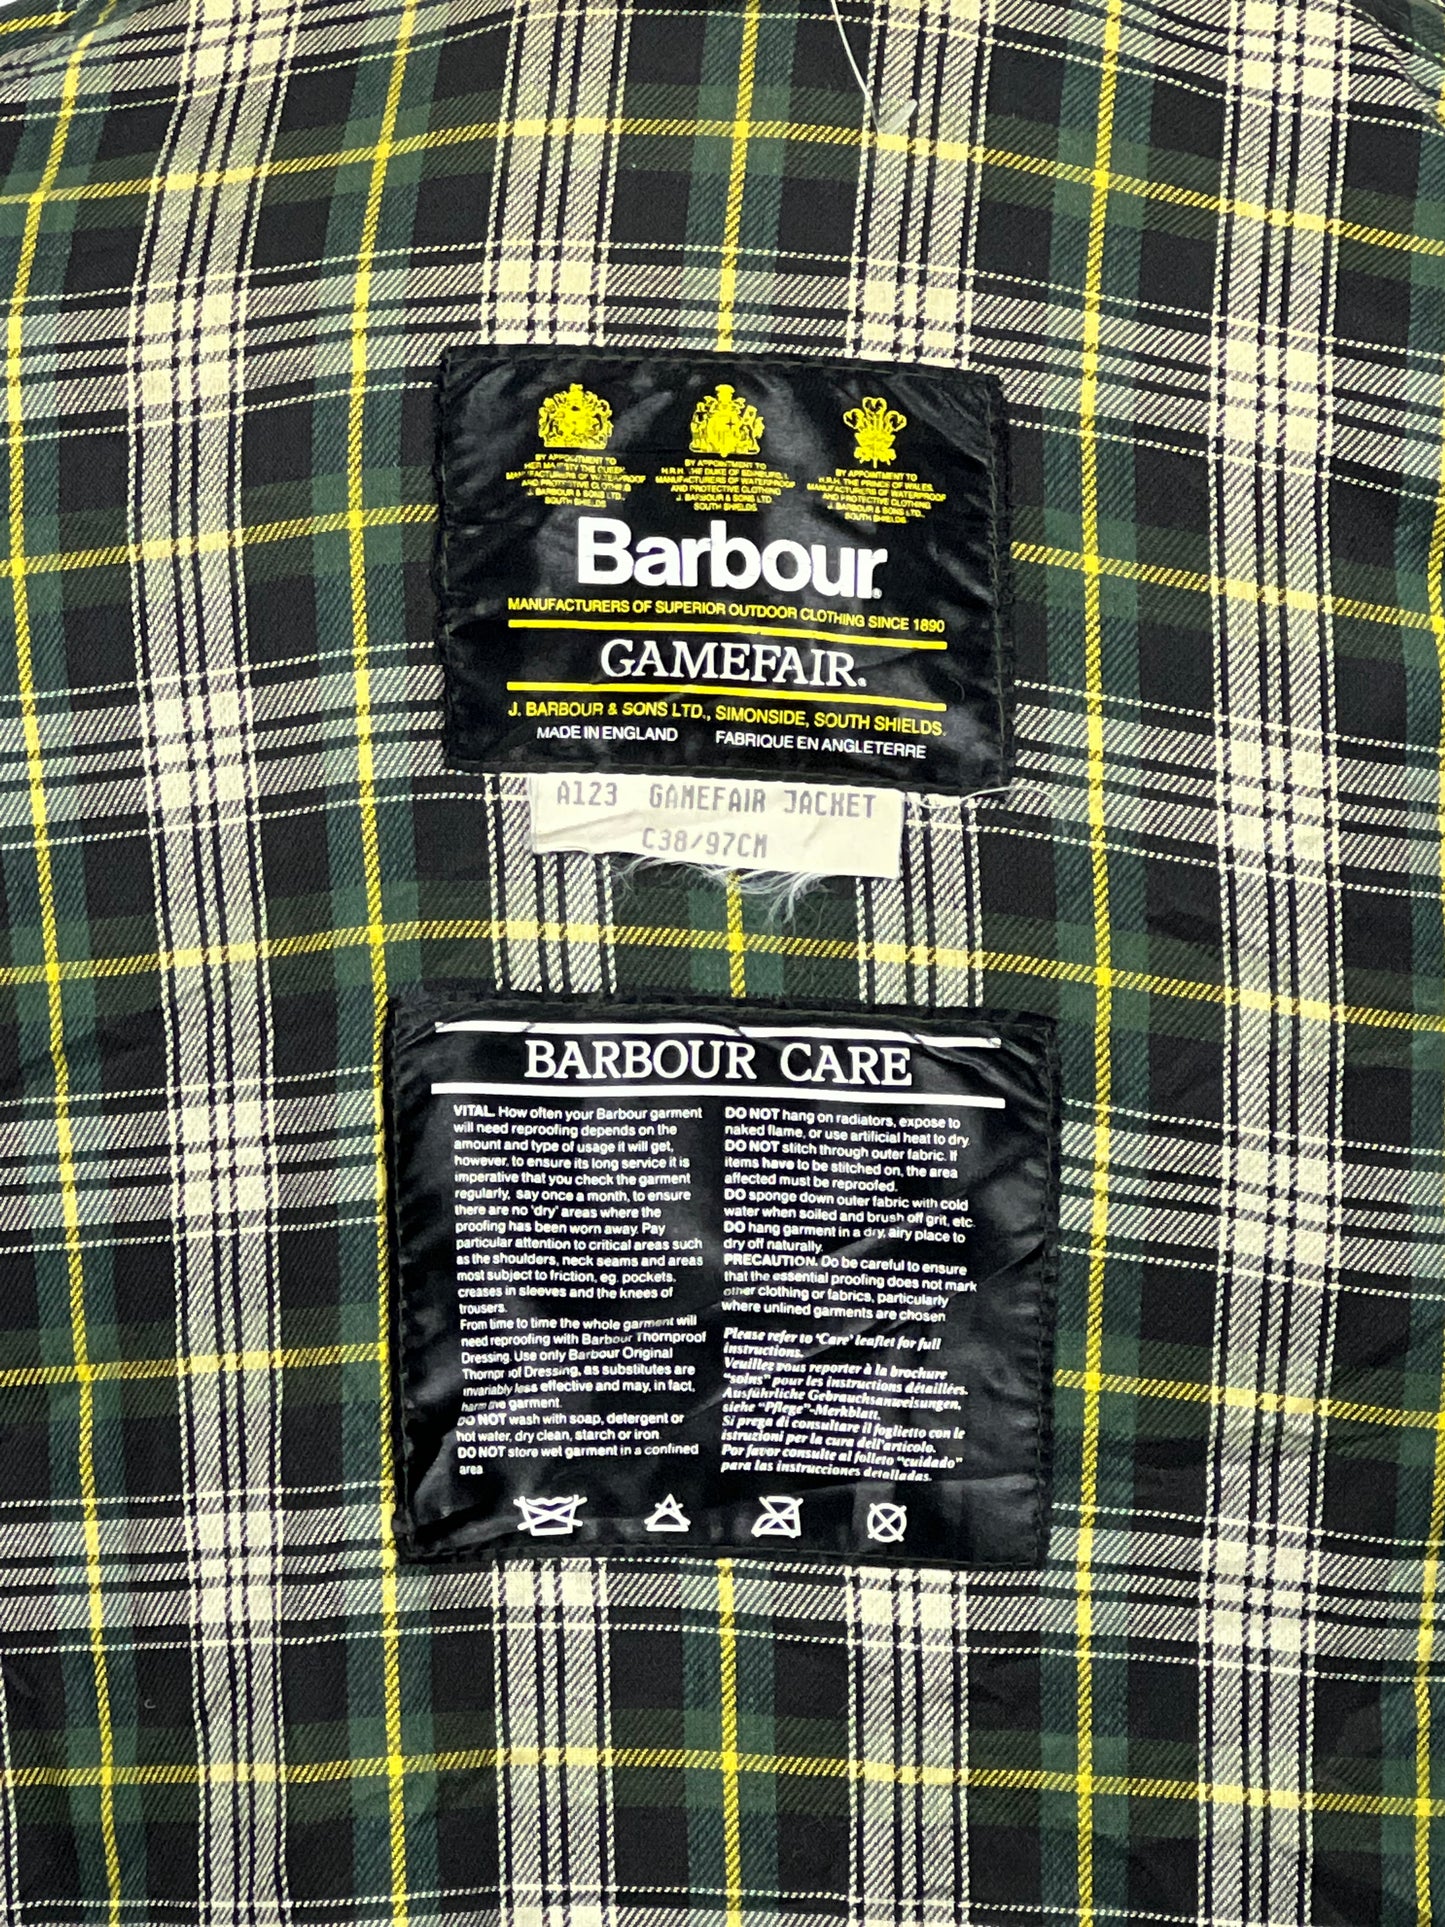 Barbour Gamefair Verde C38/97 cm Green Wax Gamefair Jacket c38 Small